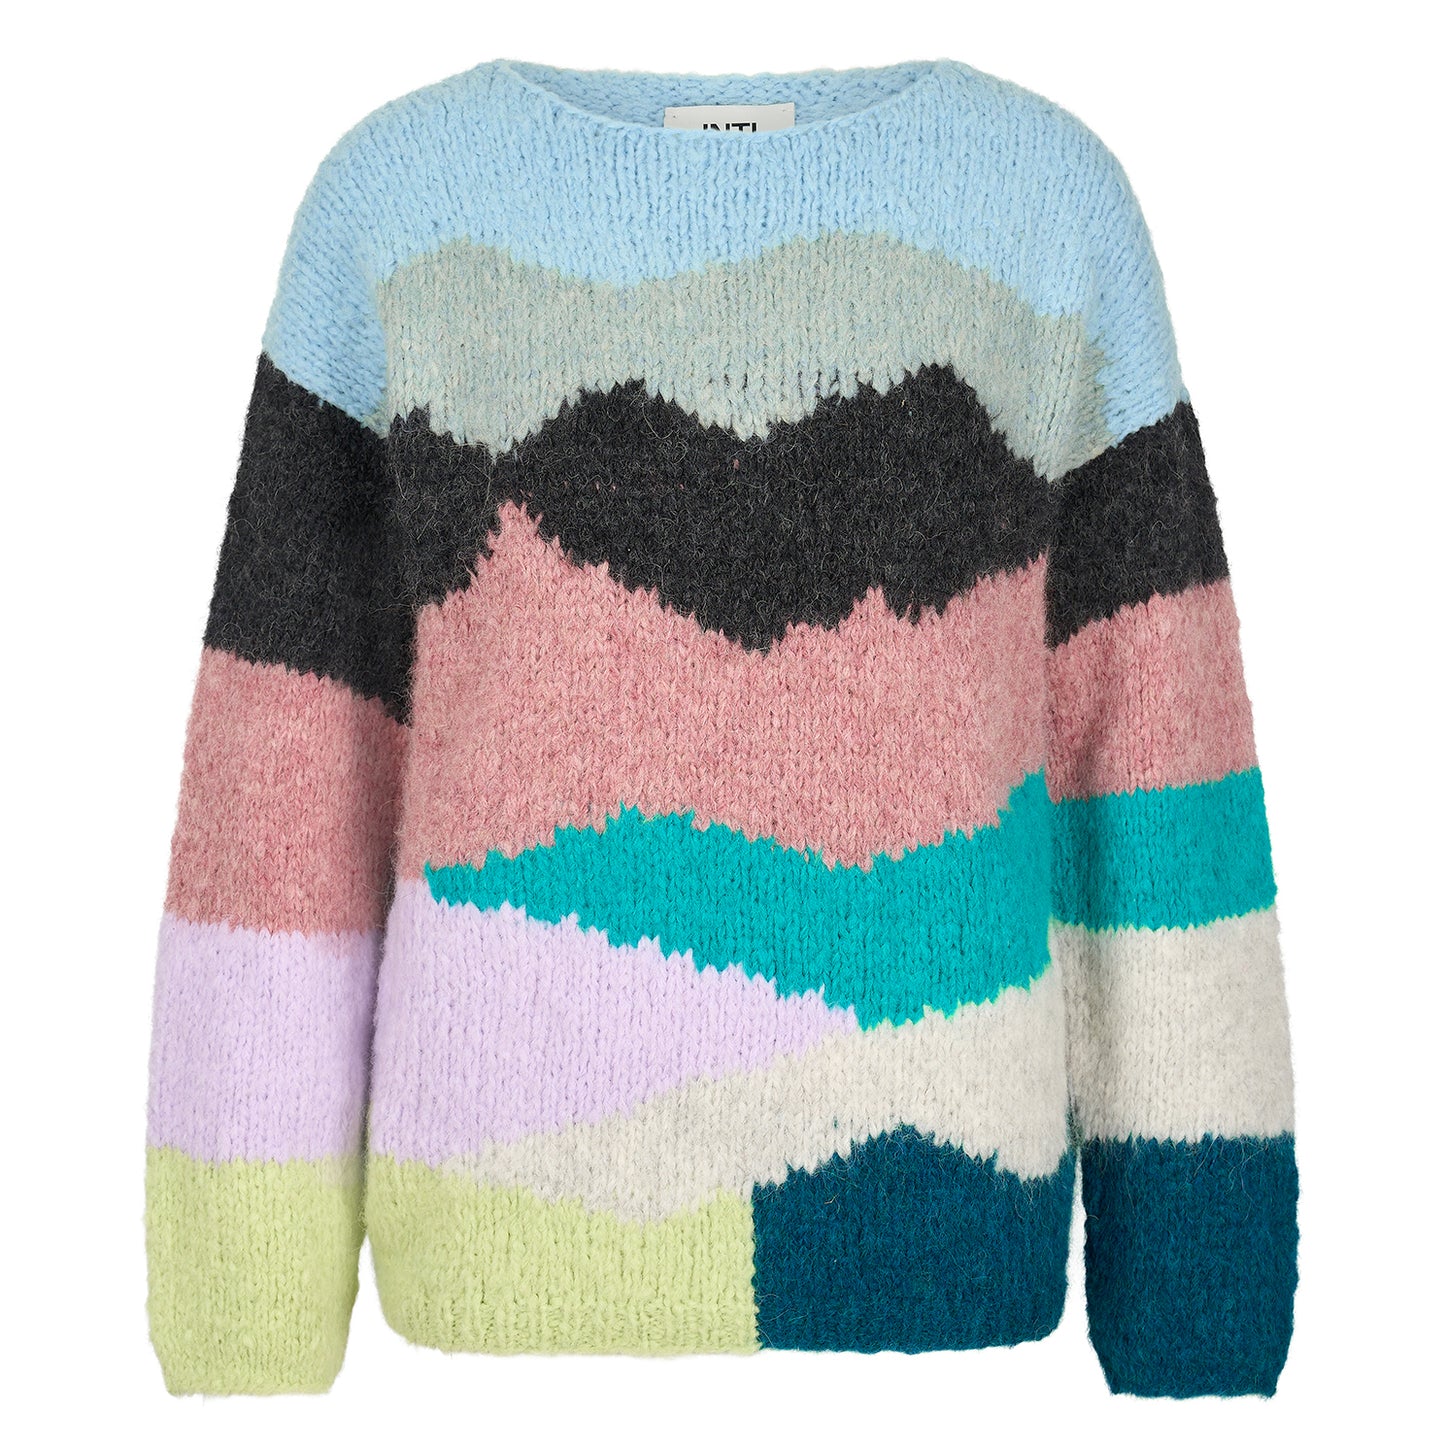 Malaga, super fluffy alpaca sweater